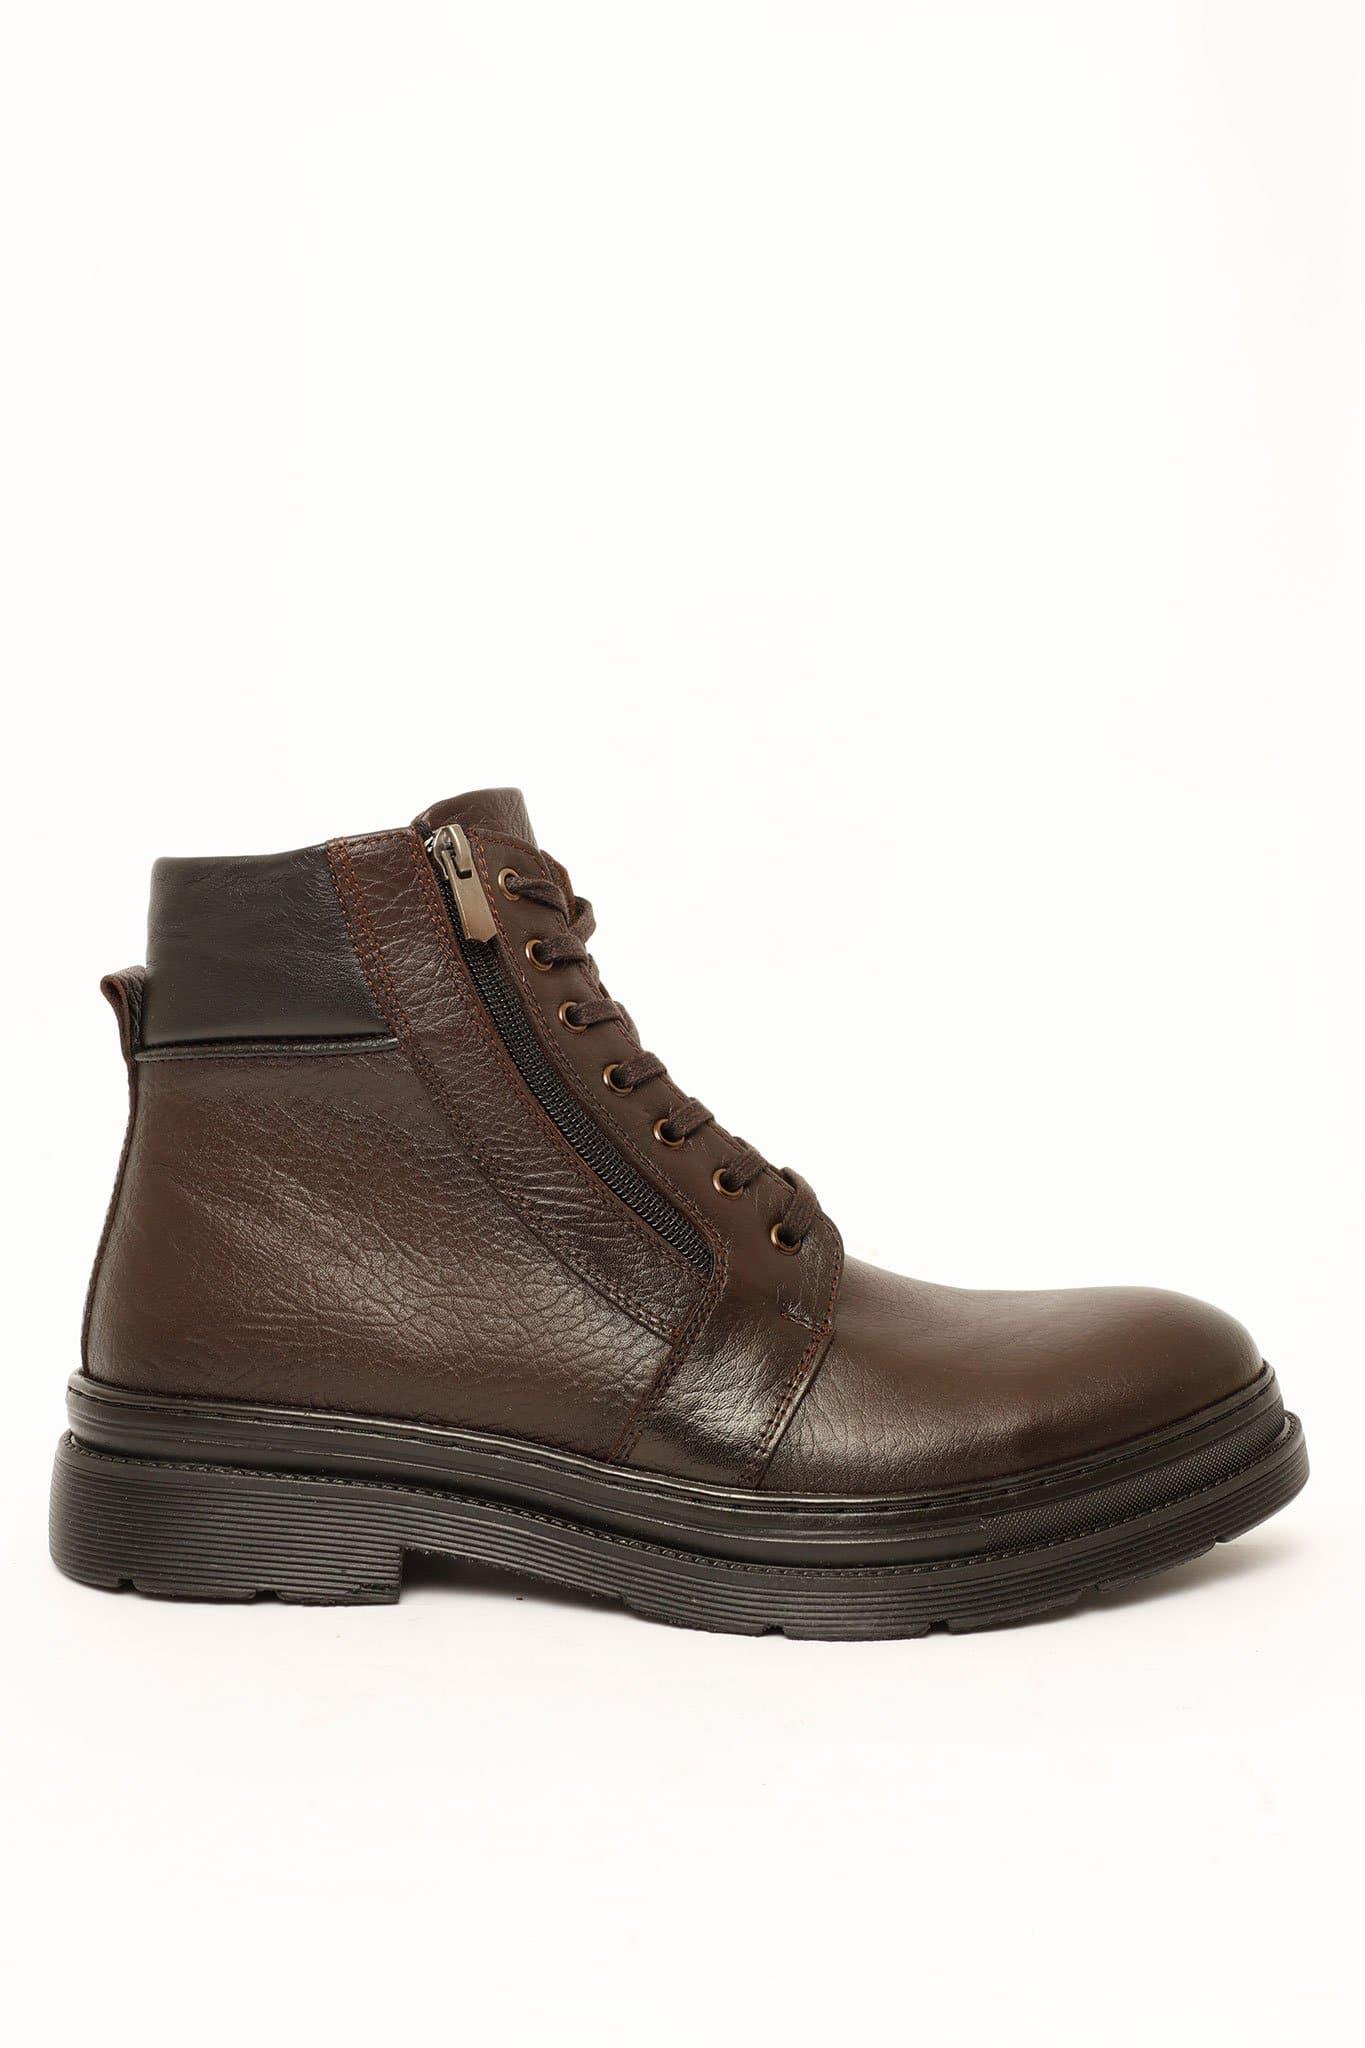 PB FAS BOOTS 10741DB, SHOE, CORADO, boots, dark brown, men, shoe, coradomoda, coradomoda.com